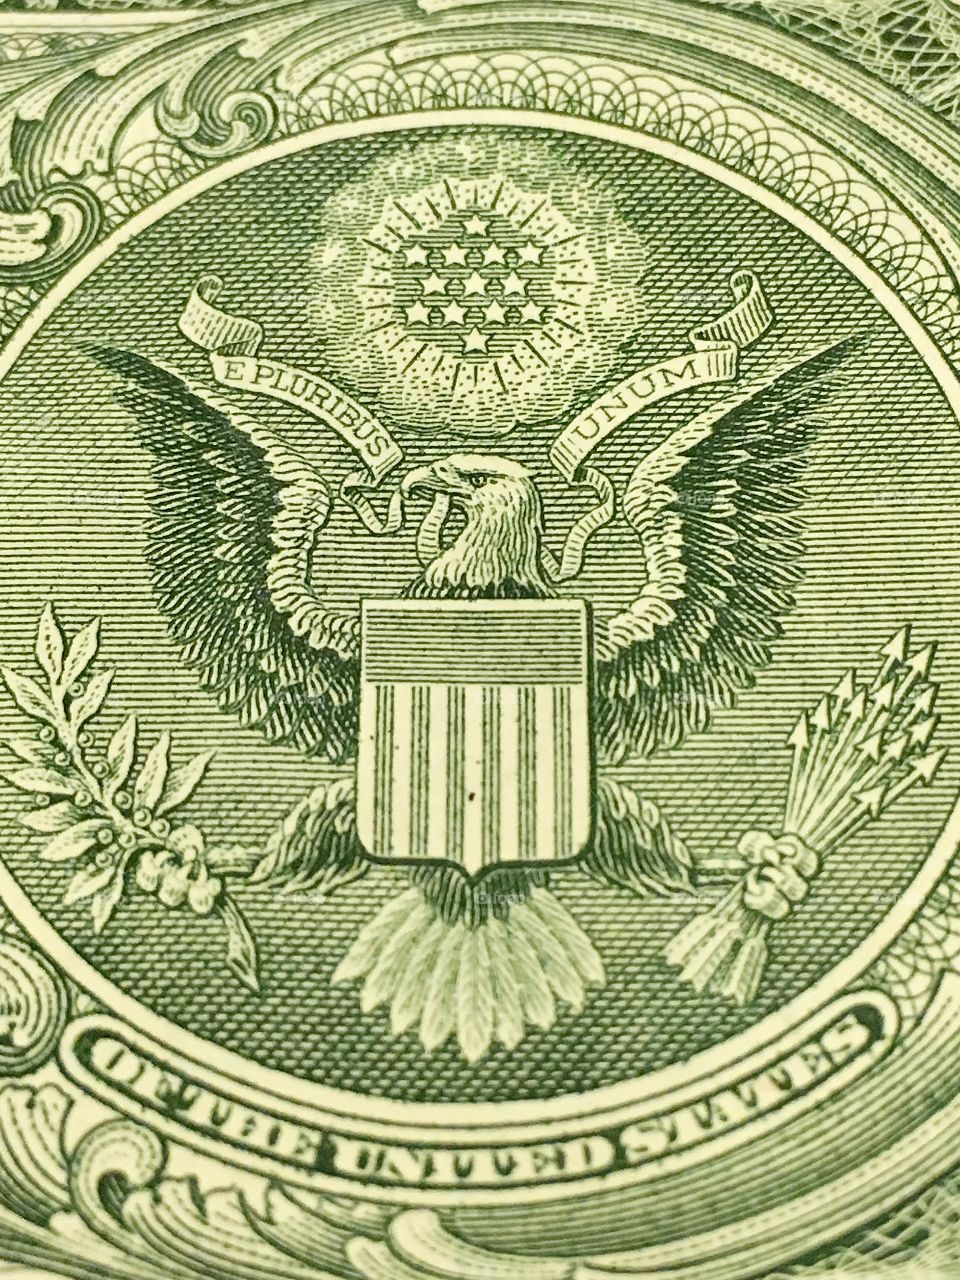 Macro photo of US dollar bill seal. 